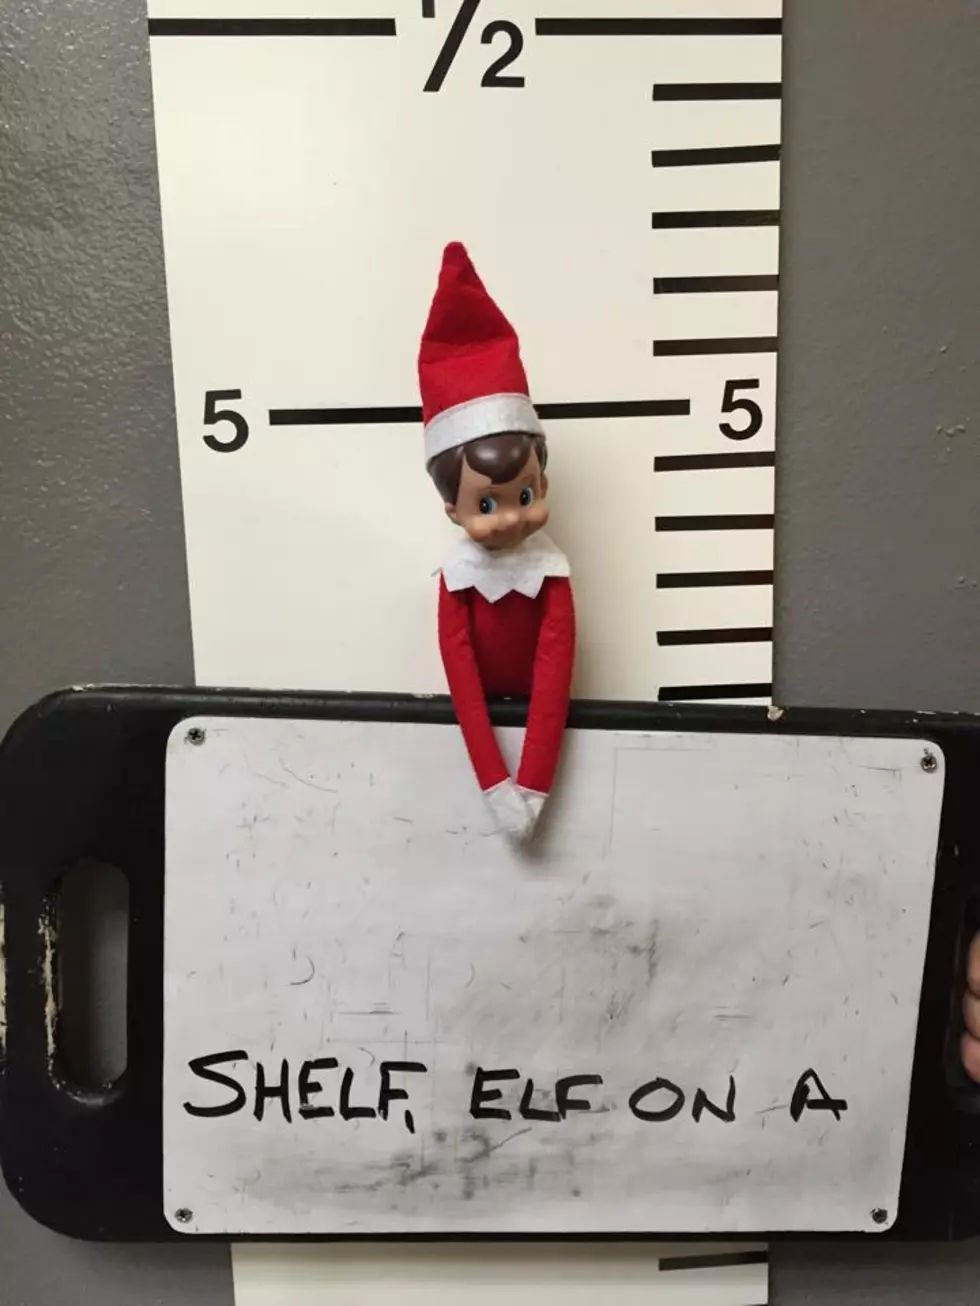 Hermiston Police Check Criminal Background of Elf On the Shelf